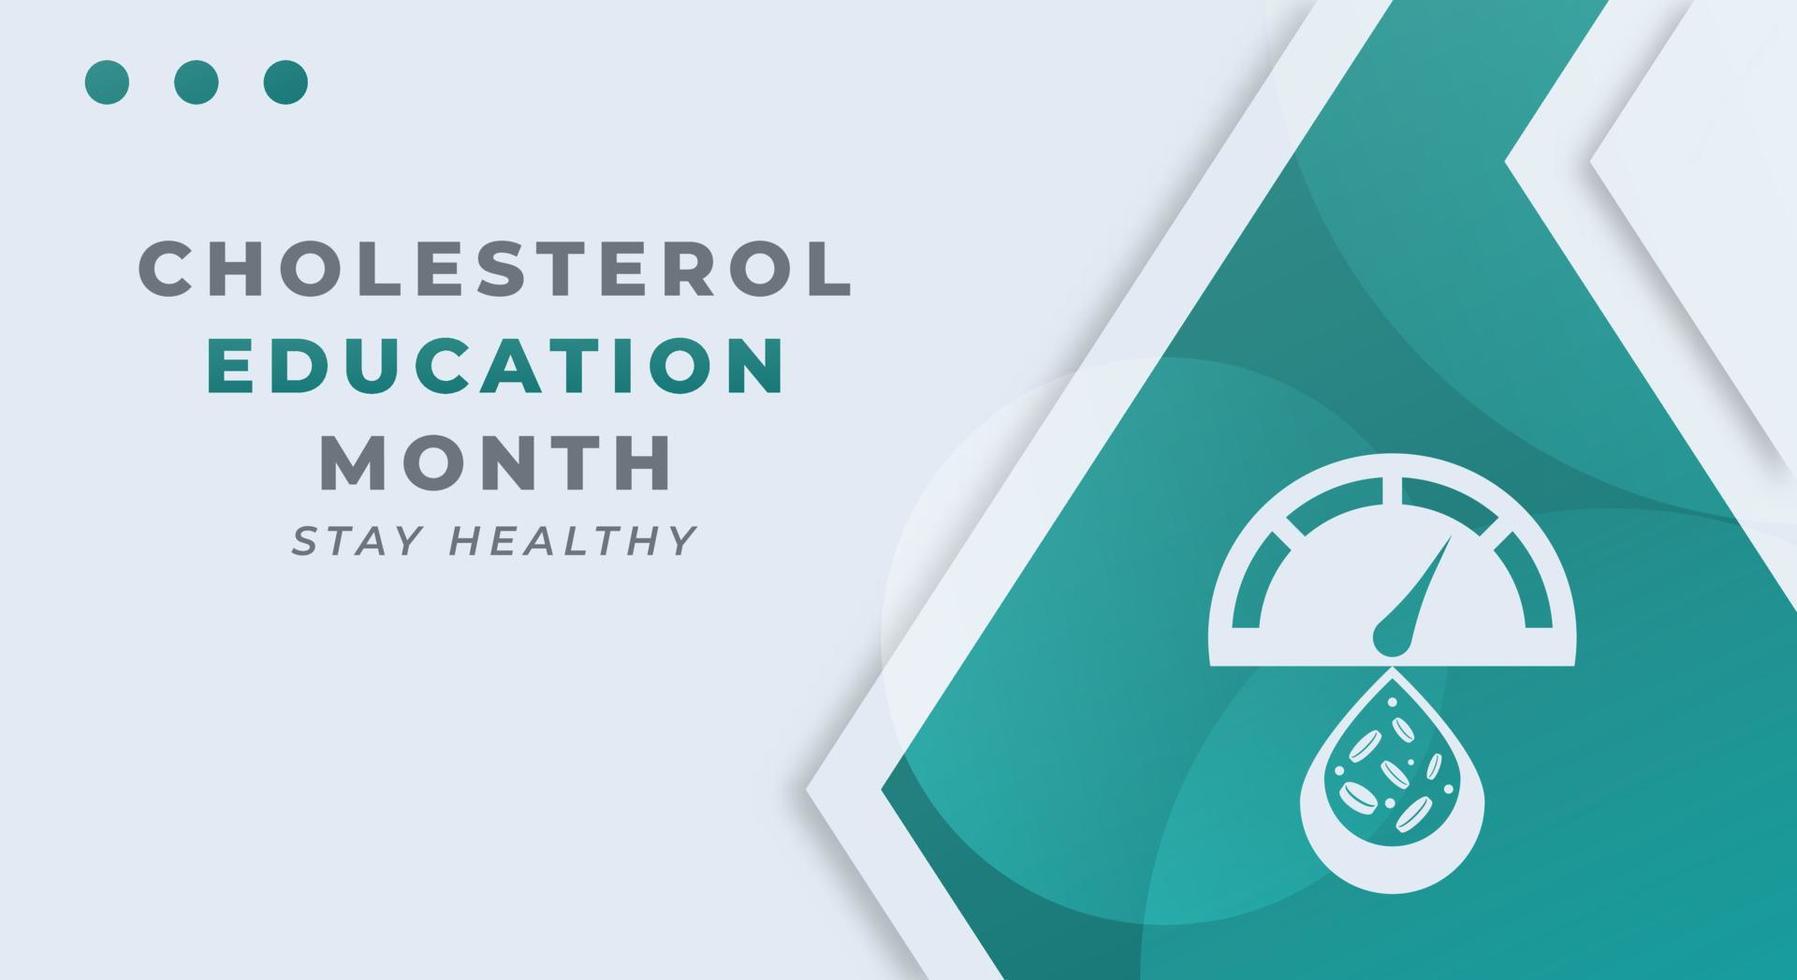 Happy National Cholesterol Education Month Celebration Vector Design Illustration for Background, Poster, Banner, Advertising, Greeting Card